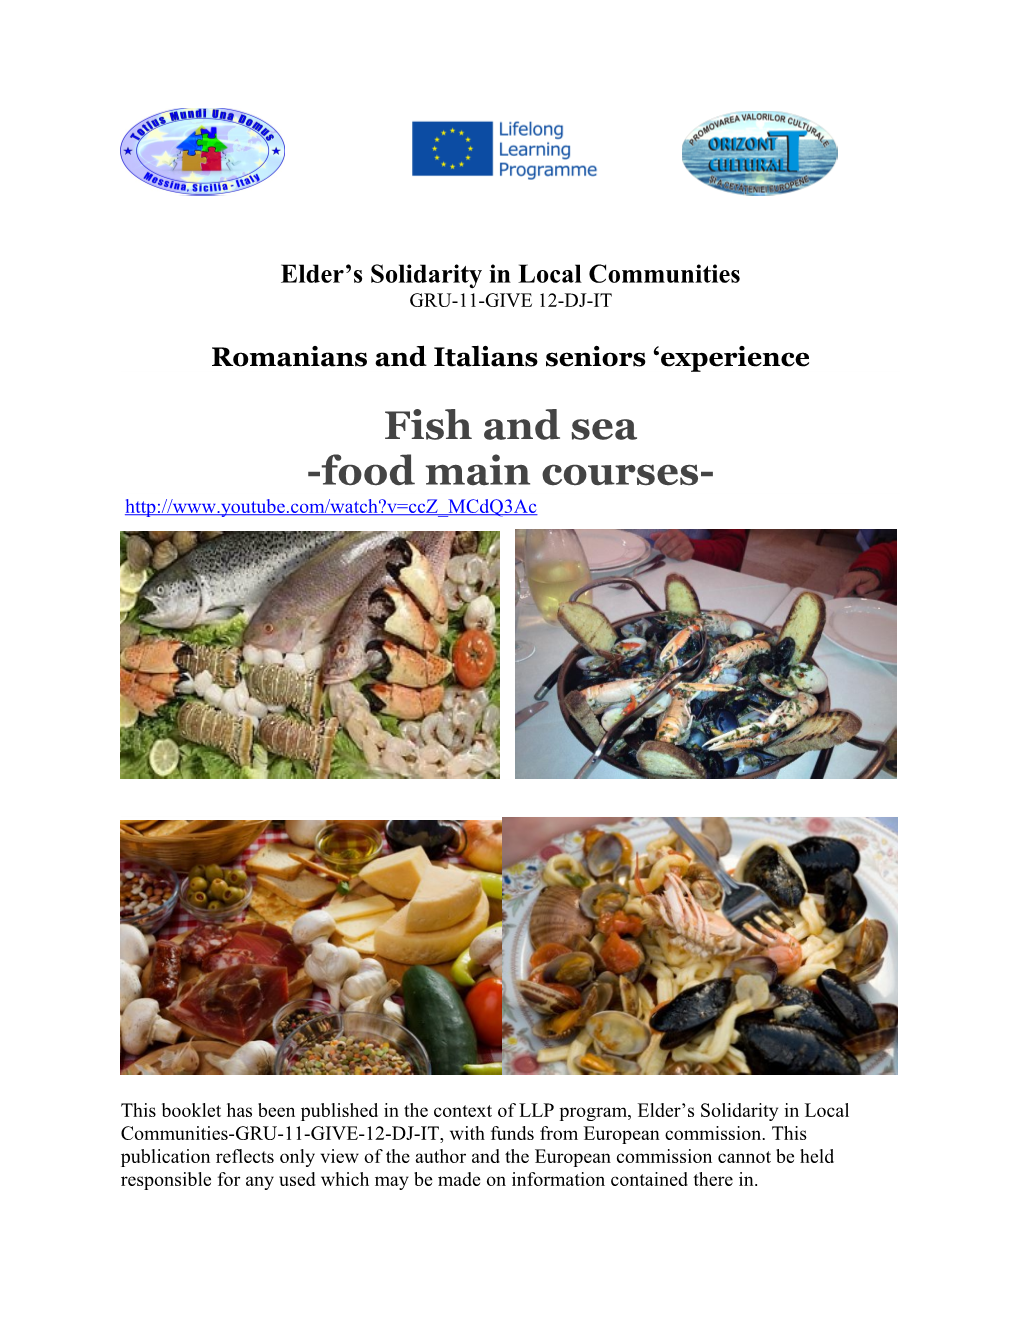 Fish and Sea-Food Main Courses